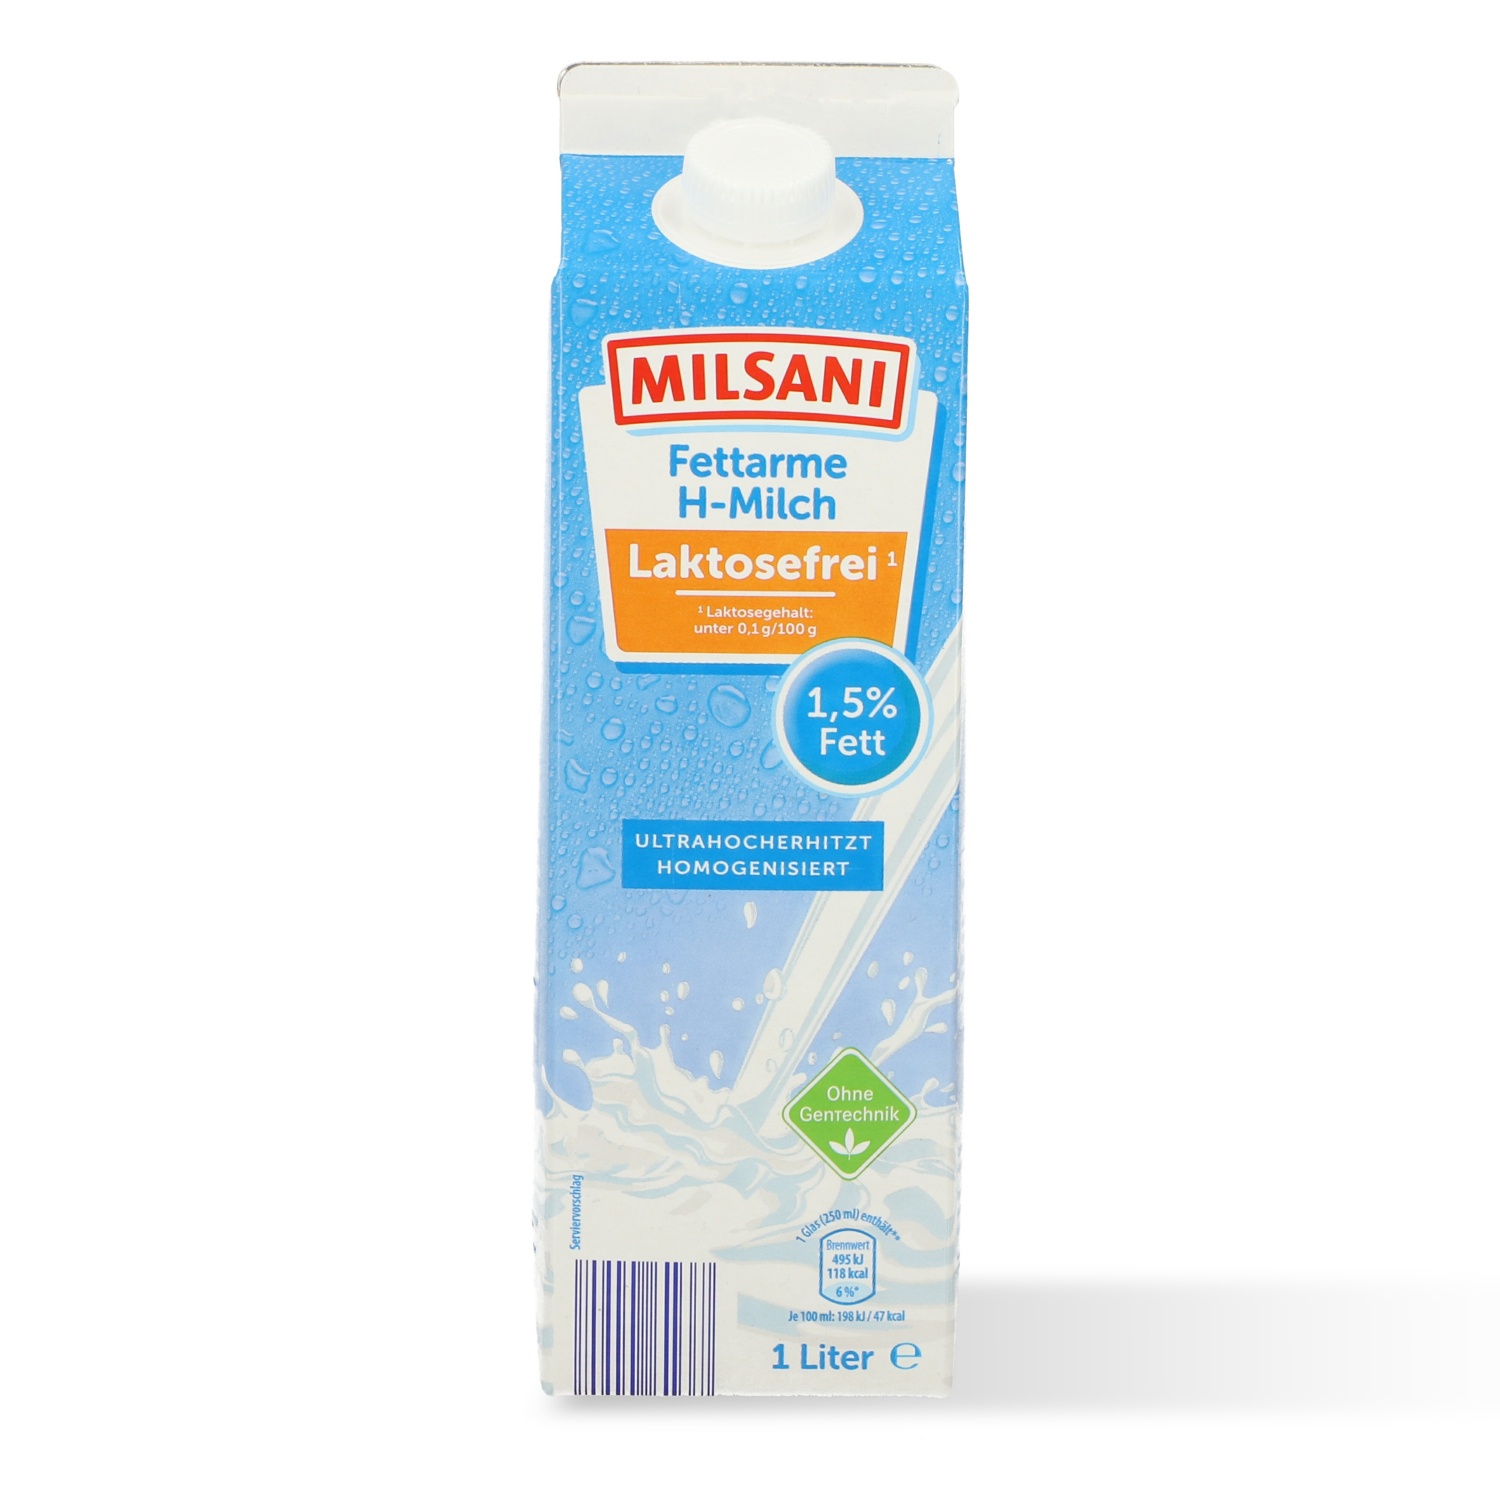 Milsani Fettarme H Milch Laktosefrei 1 5 Fett 1l Aldi Sud